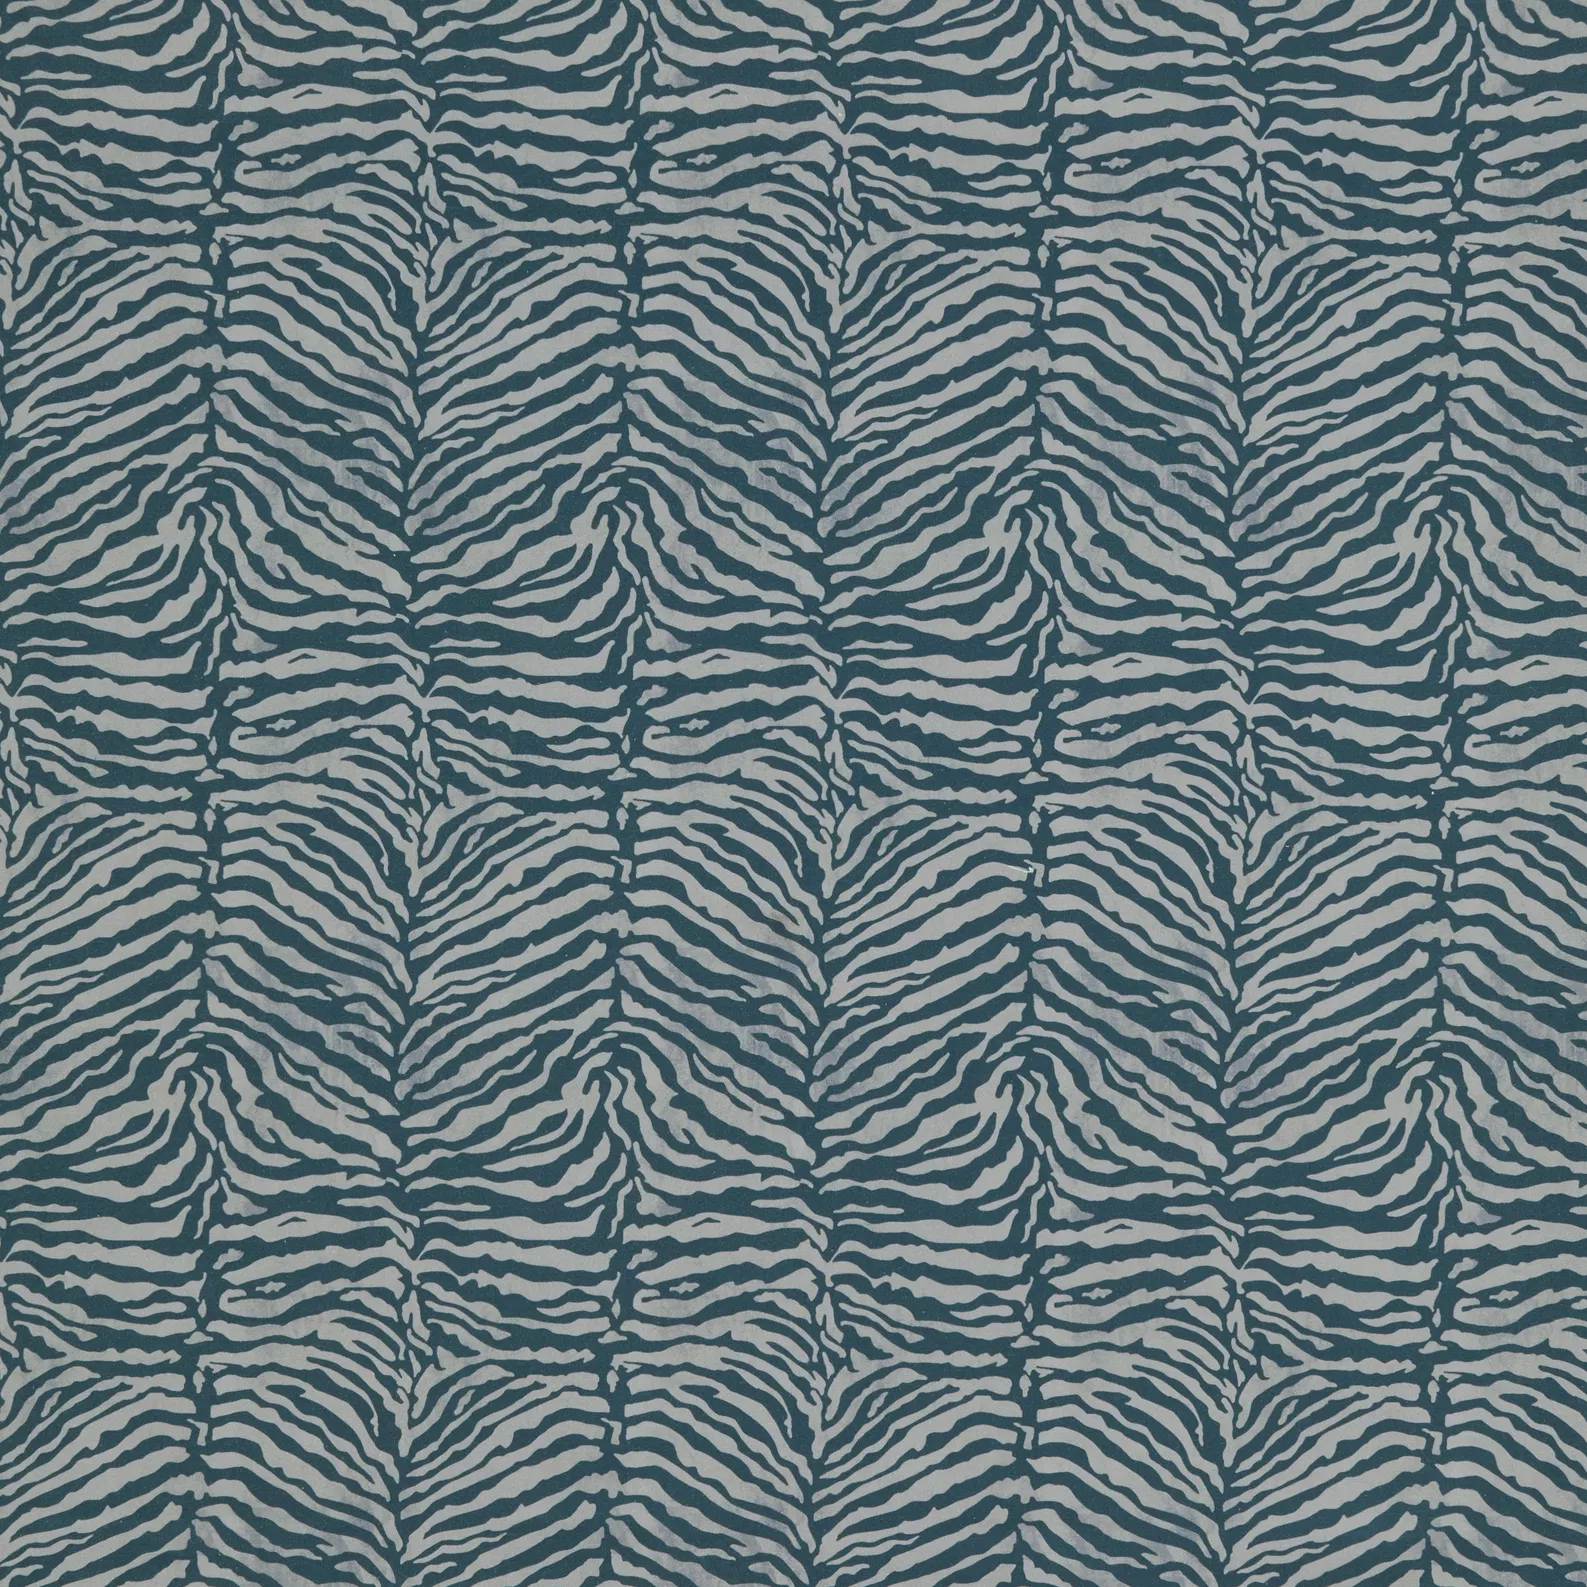 Warwick Fabrics Nasir Animal Upholstery Fabric